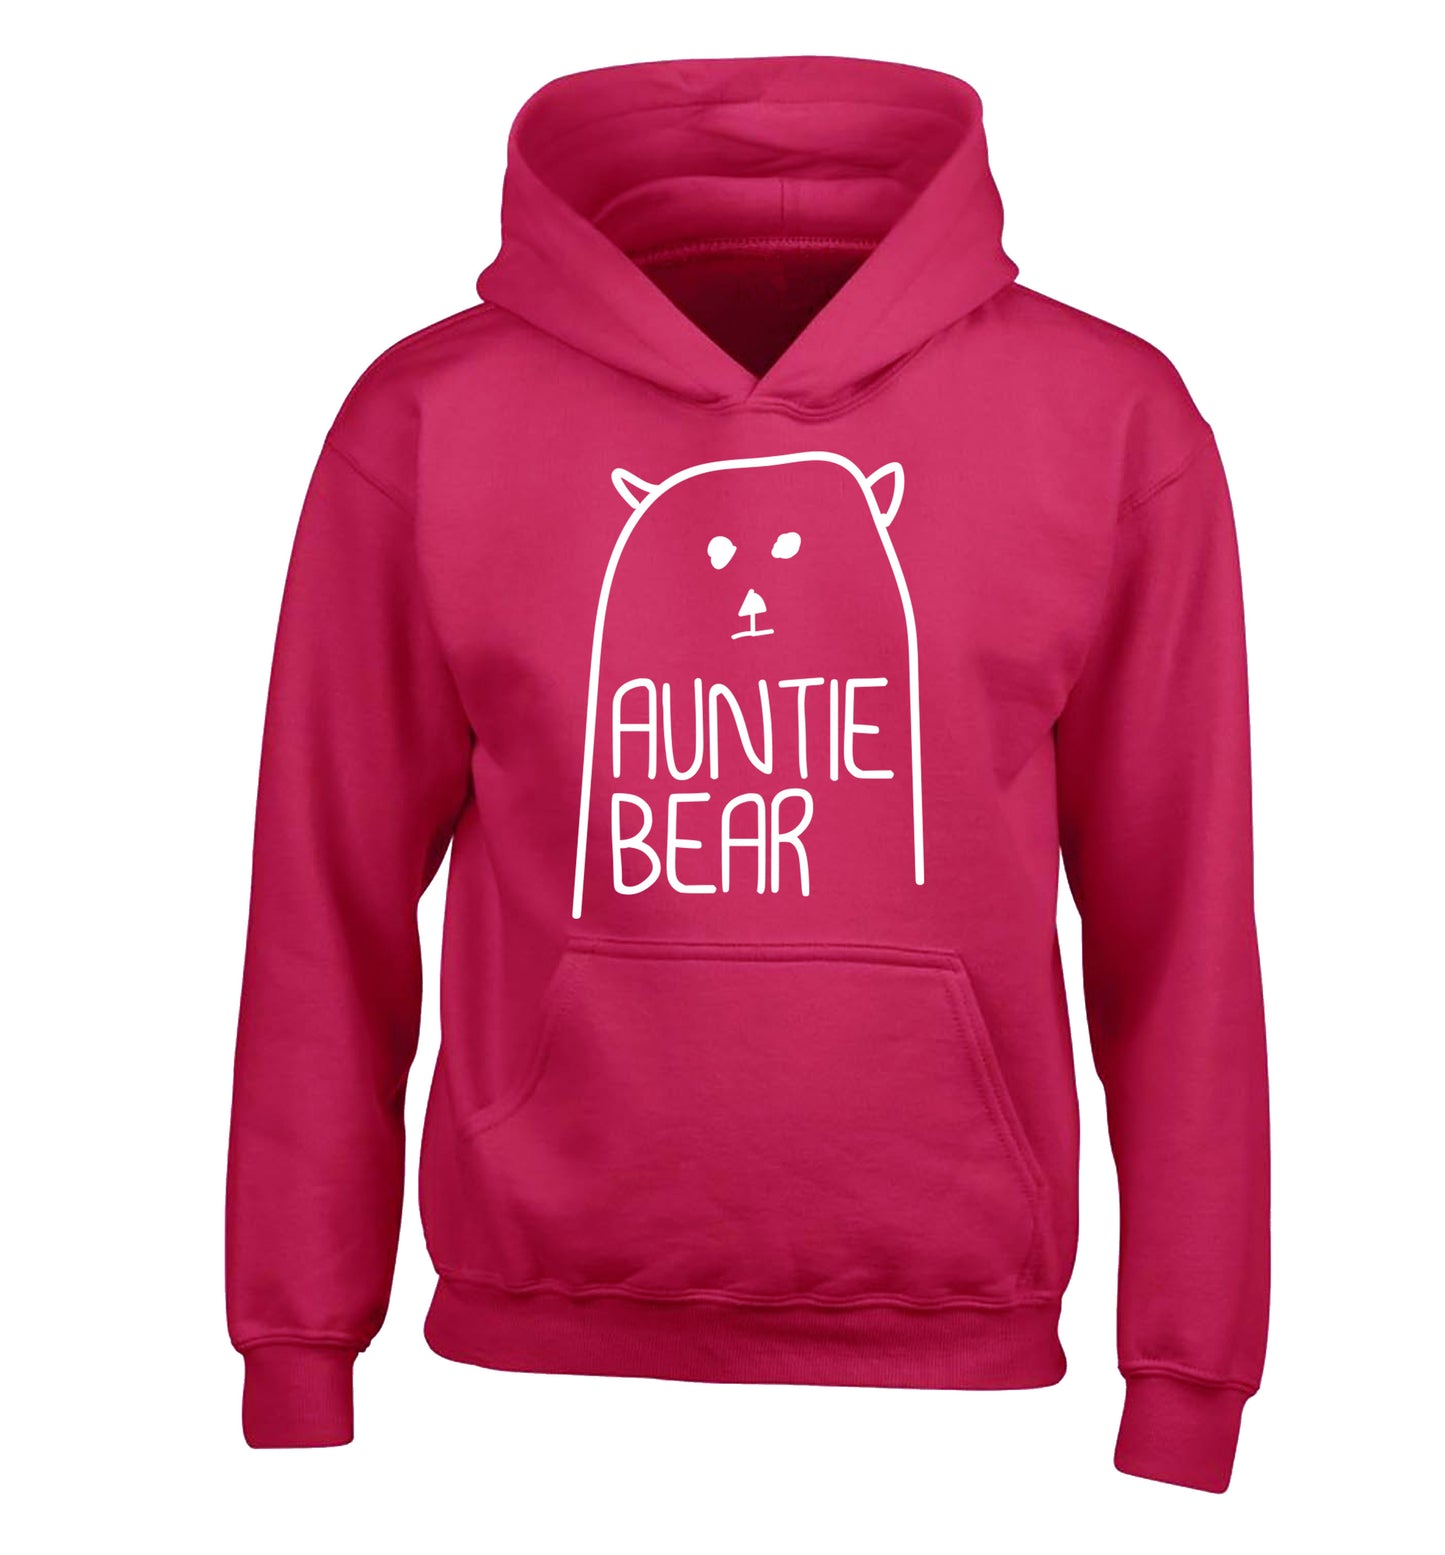 Auntie bear children's pink hoodie 12-13 Years